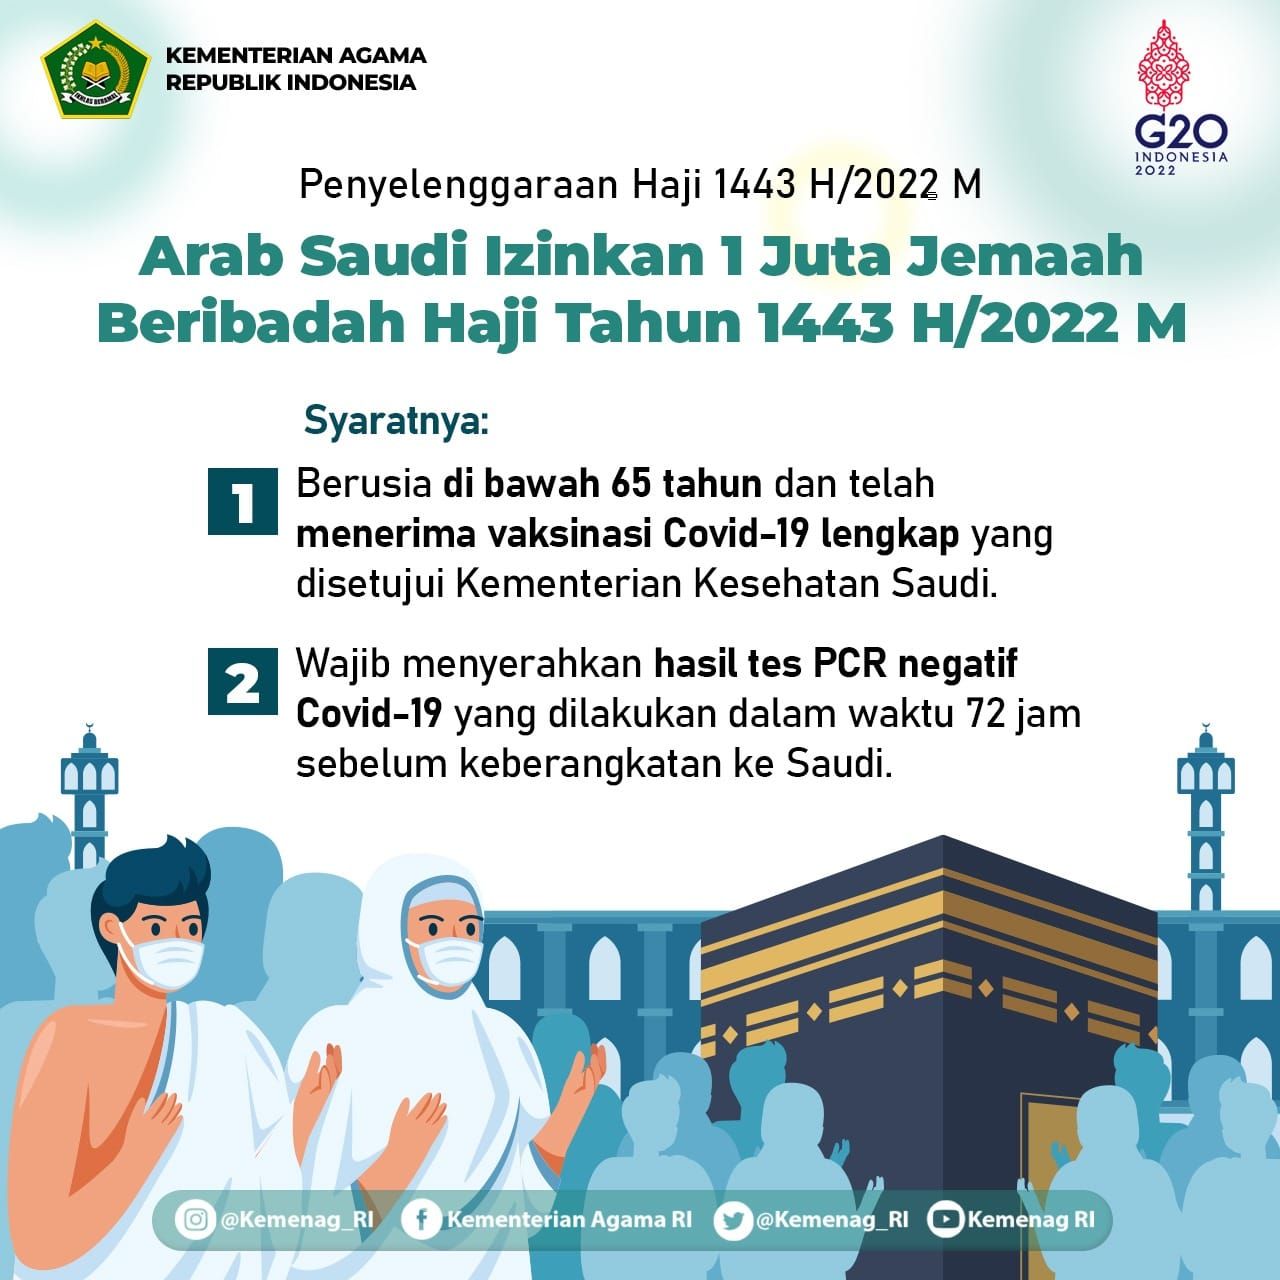 Haji 2022